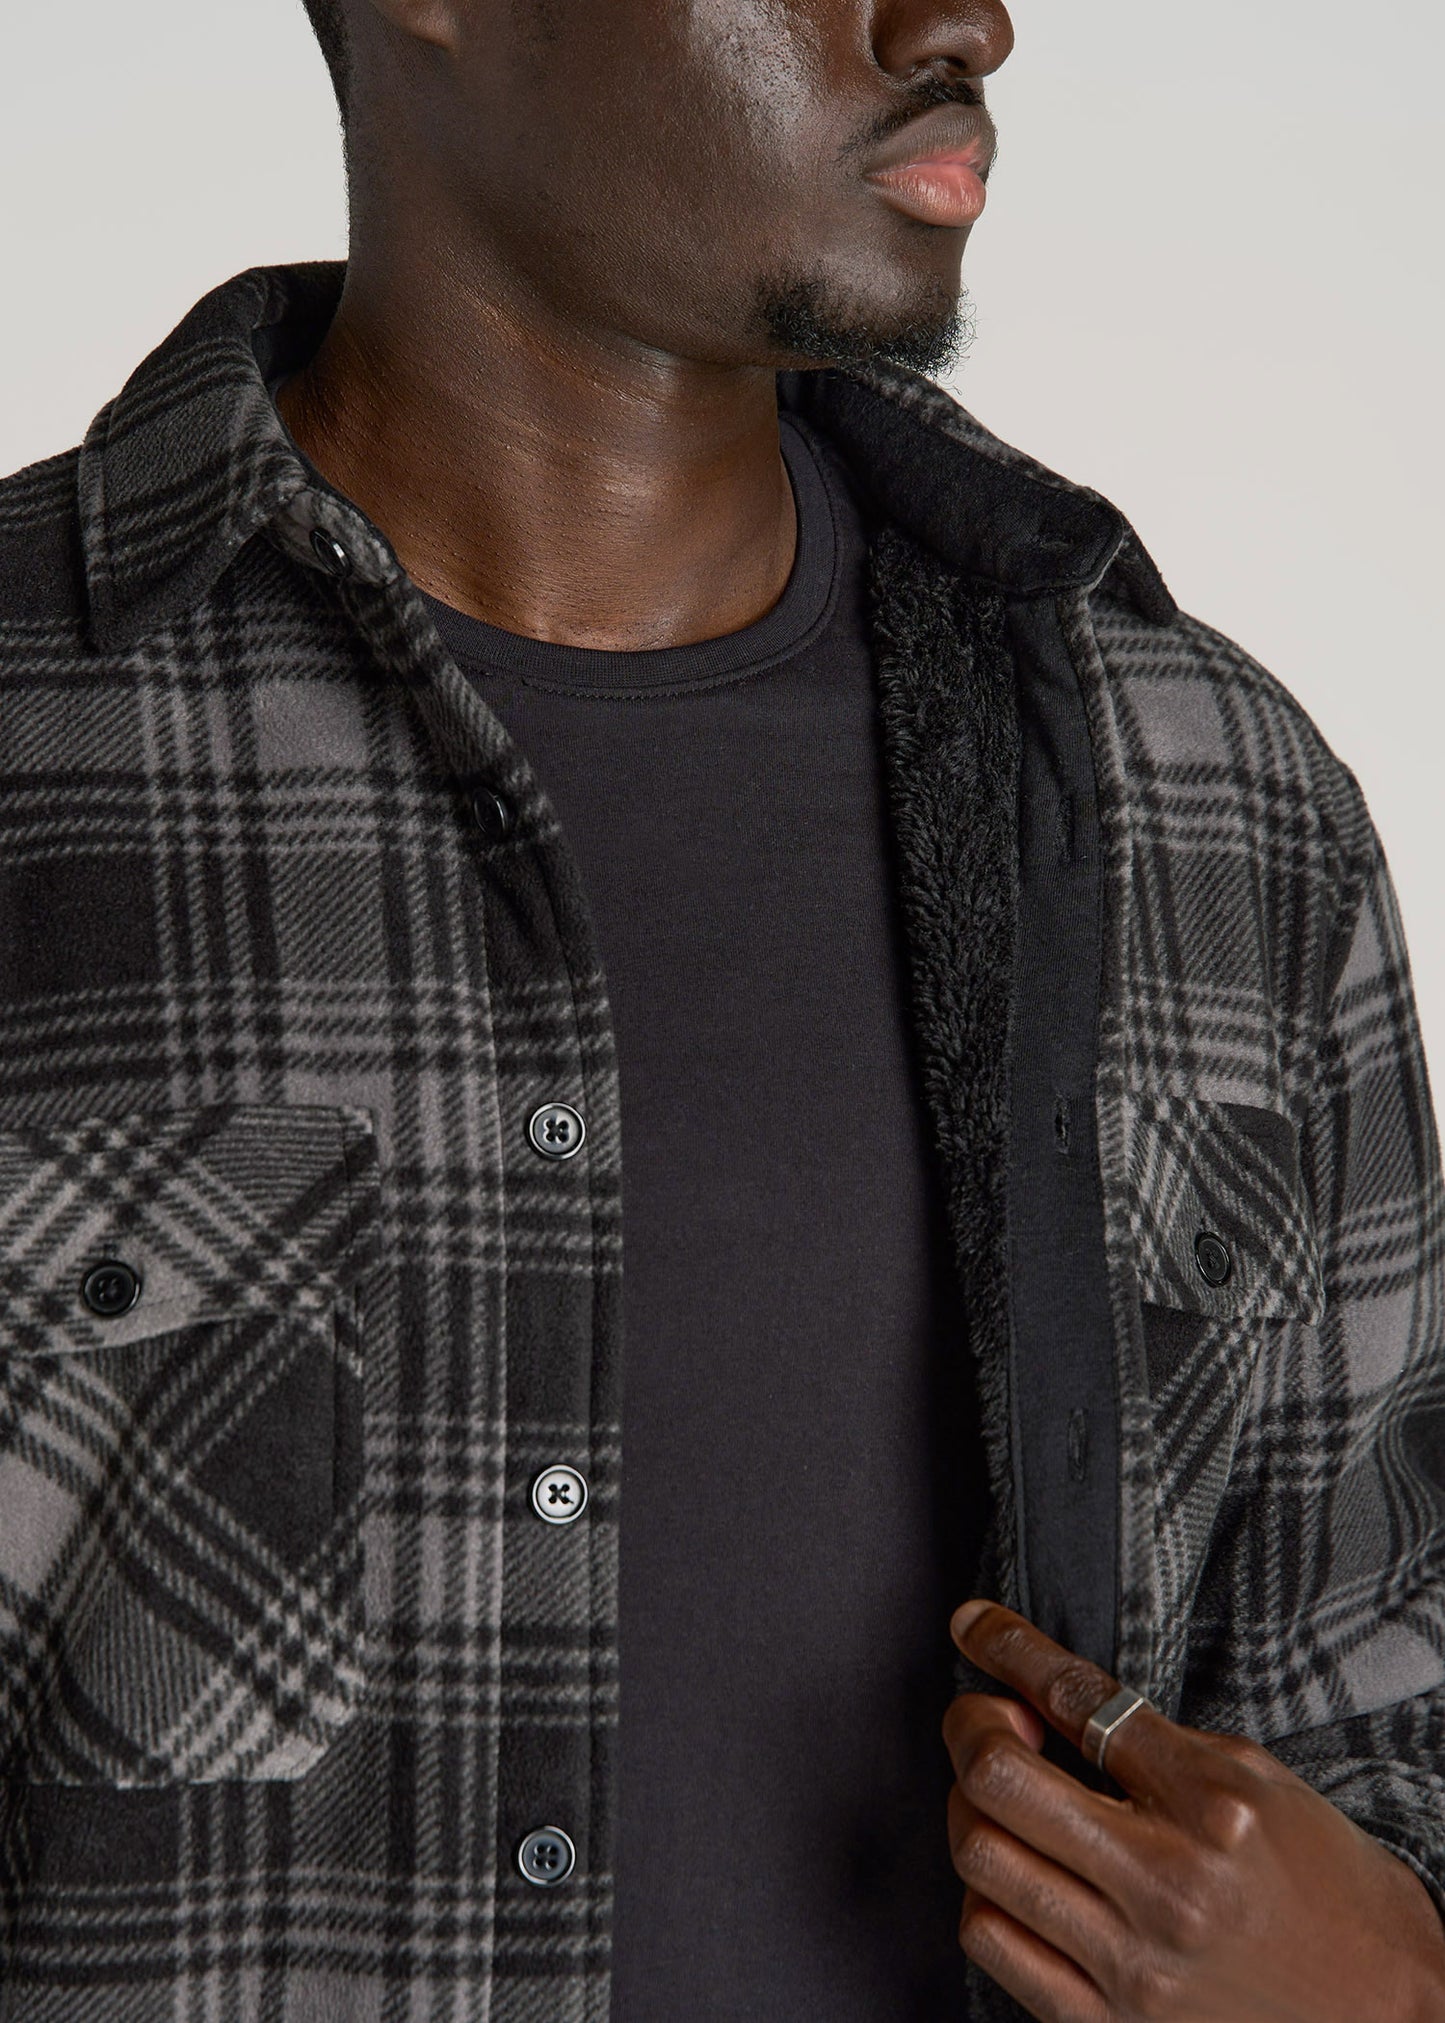 Sherpa-Lined Fleece Overshirt for Tall Men in Light Grey & Black Plaid